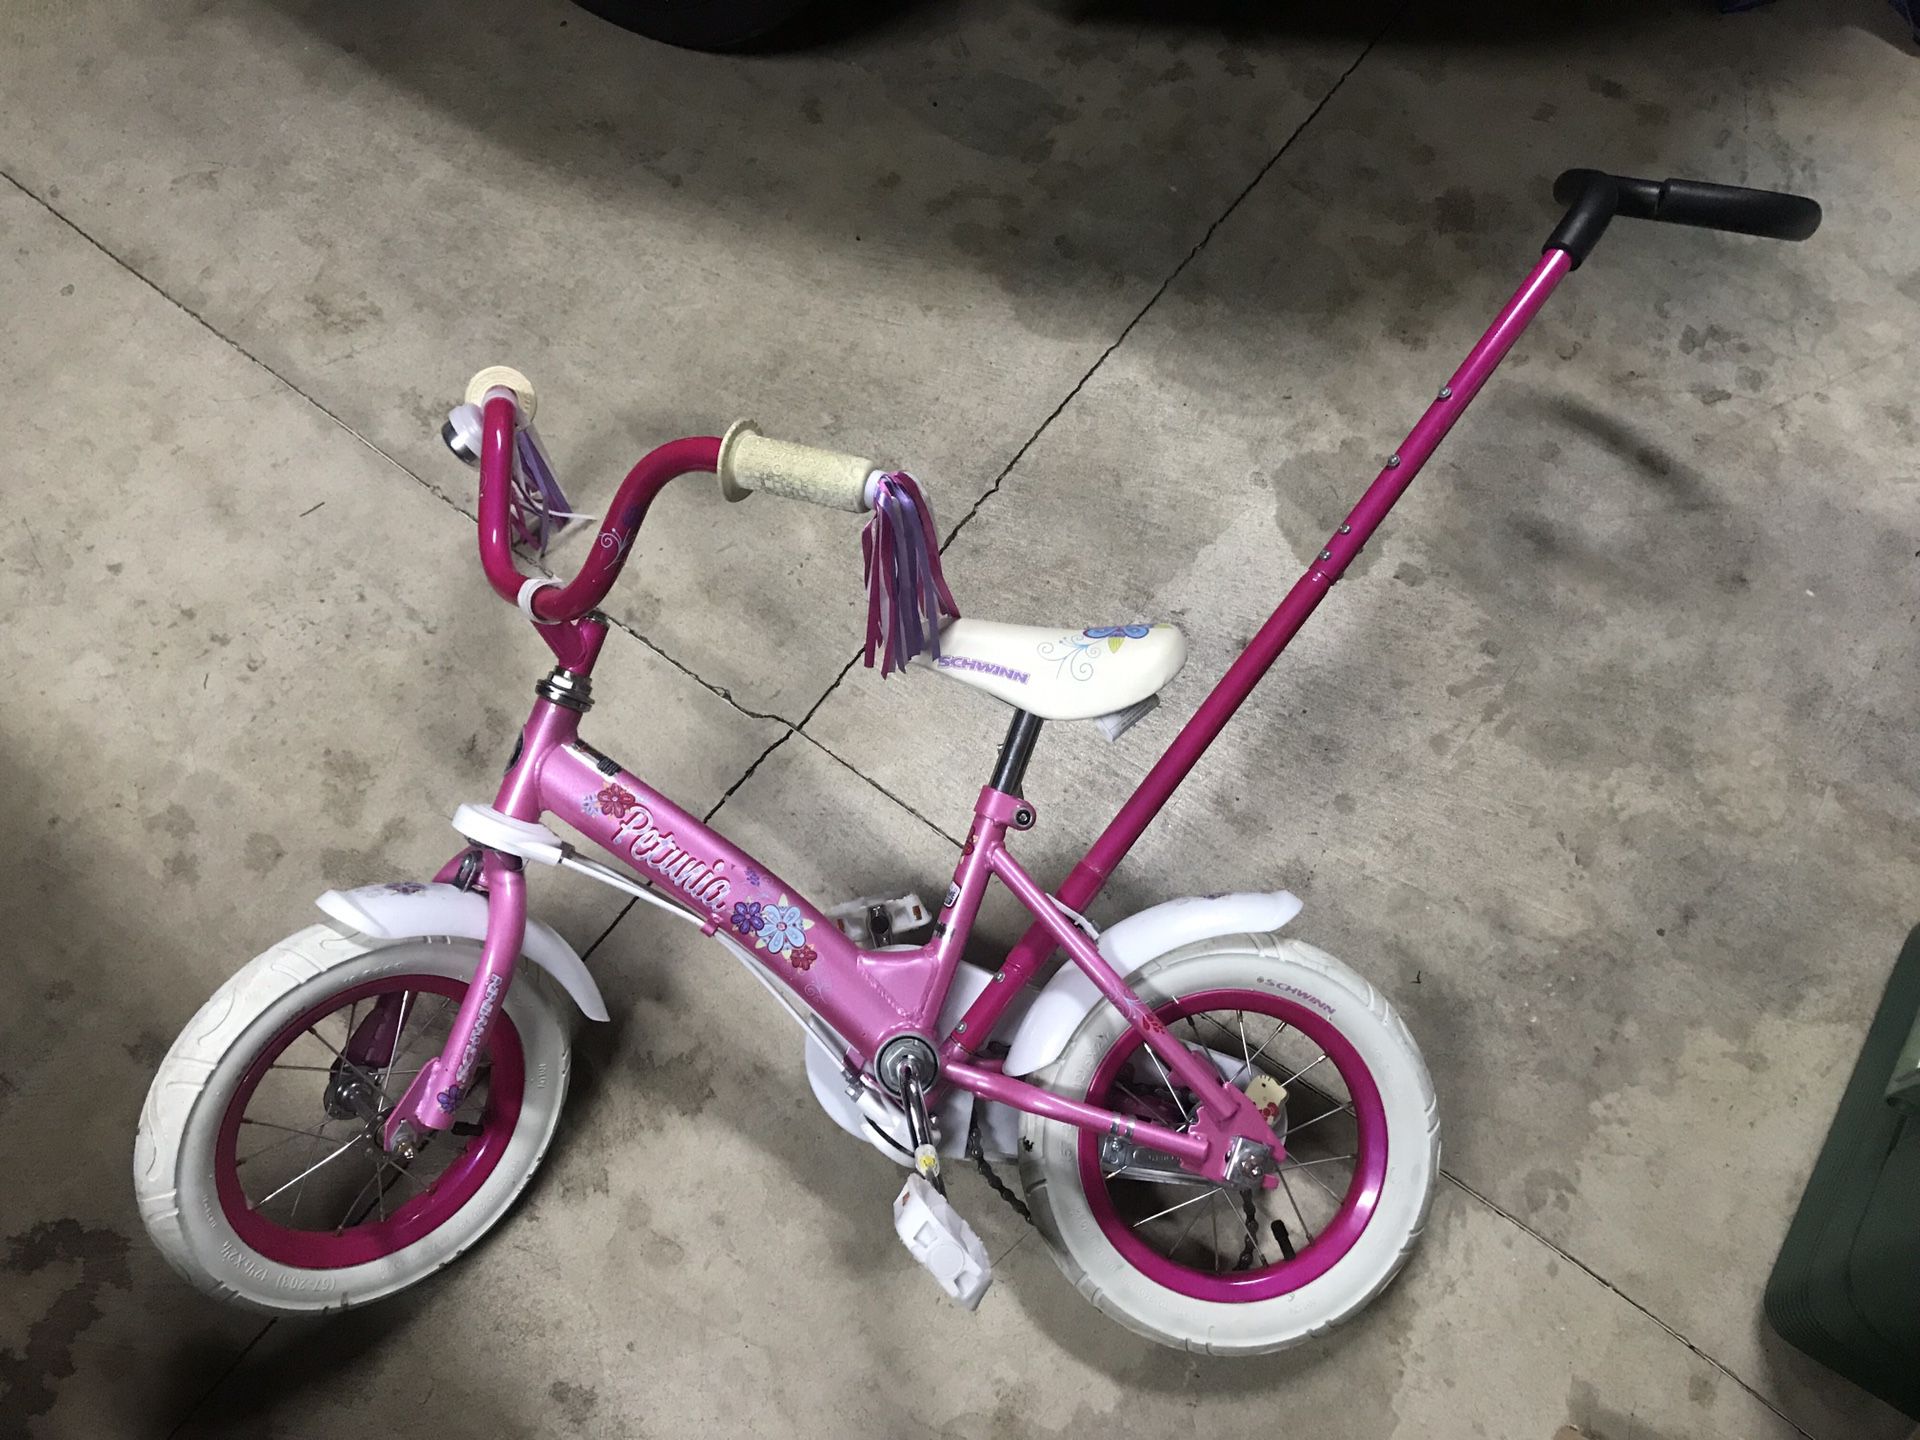 Little girl’s bike - ages 4-6